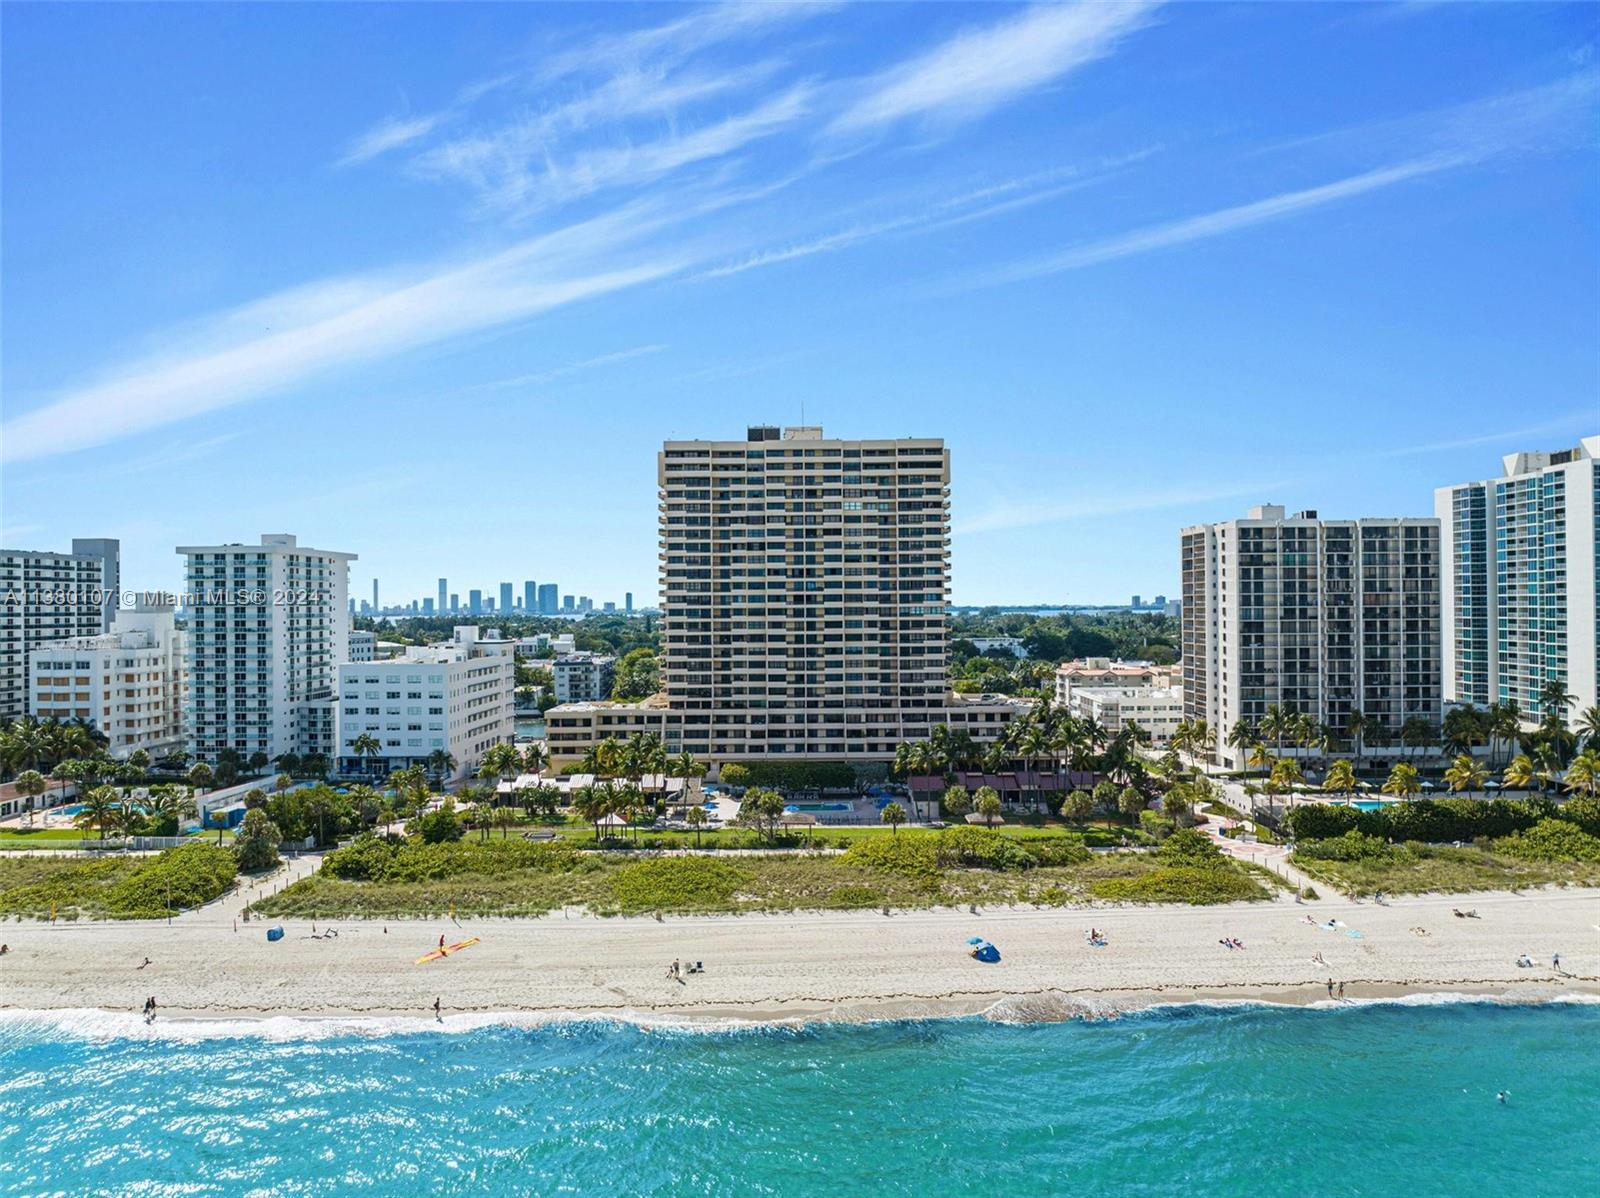 Rental Property at 2555 Collins Ave 1706, Miami Beach, Miami-Dade County, Florida - Bedrooms: 2 
Bathrooms: 2  - $5,000 MO.